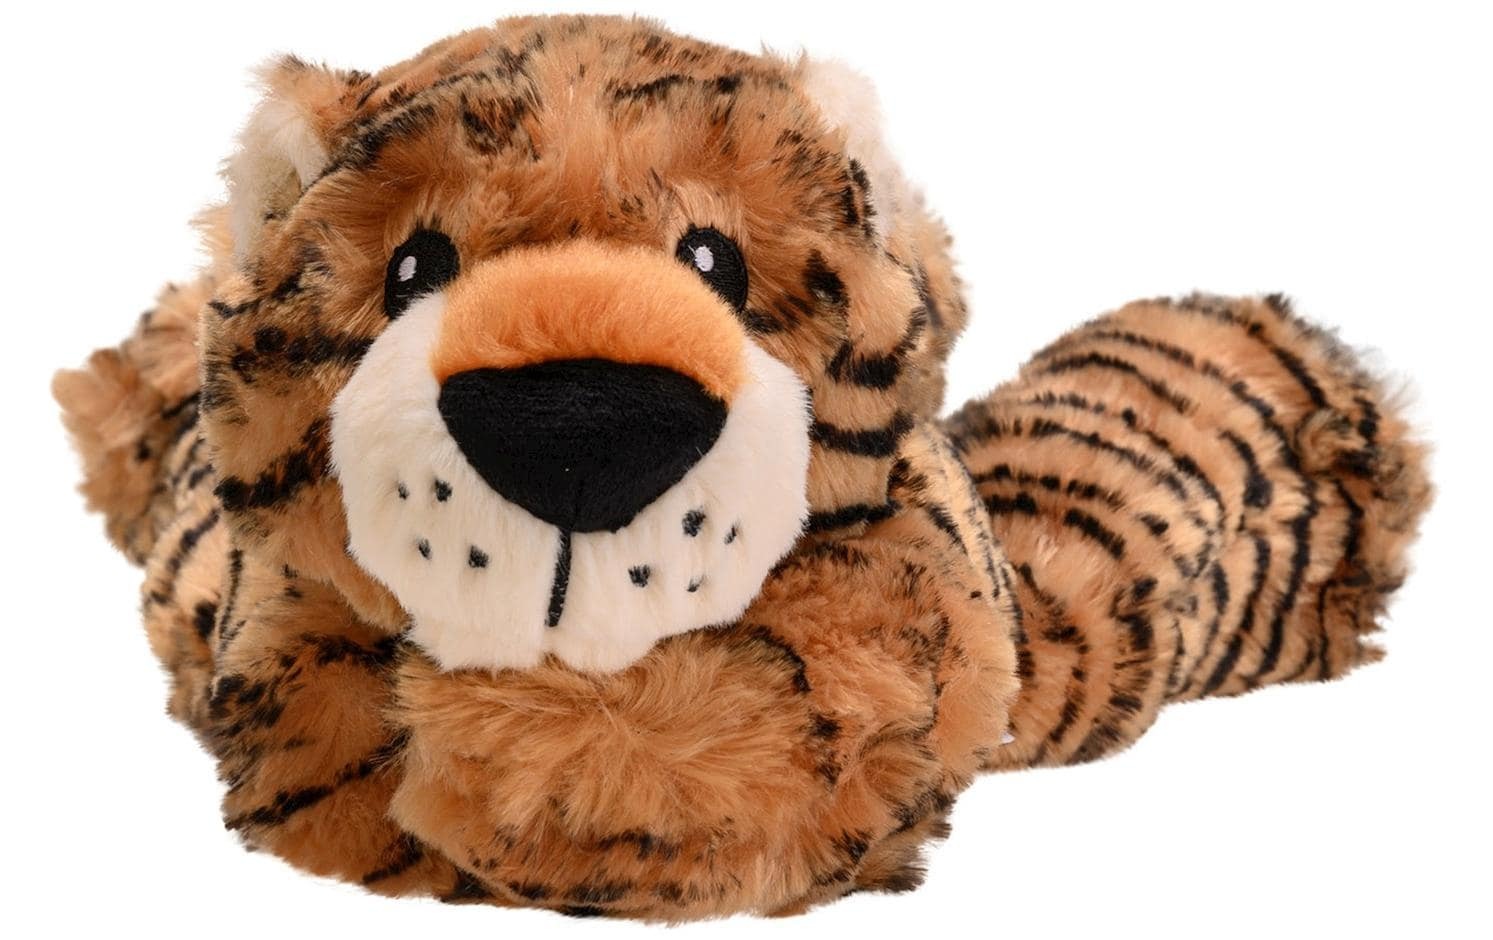 Plüschfigur »Welliebellies Tiger gross 10 cm«